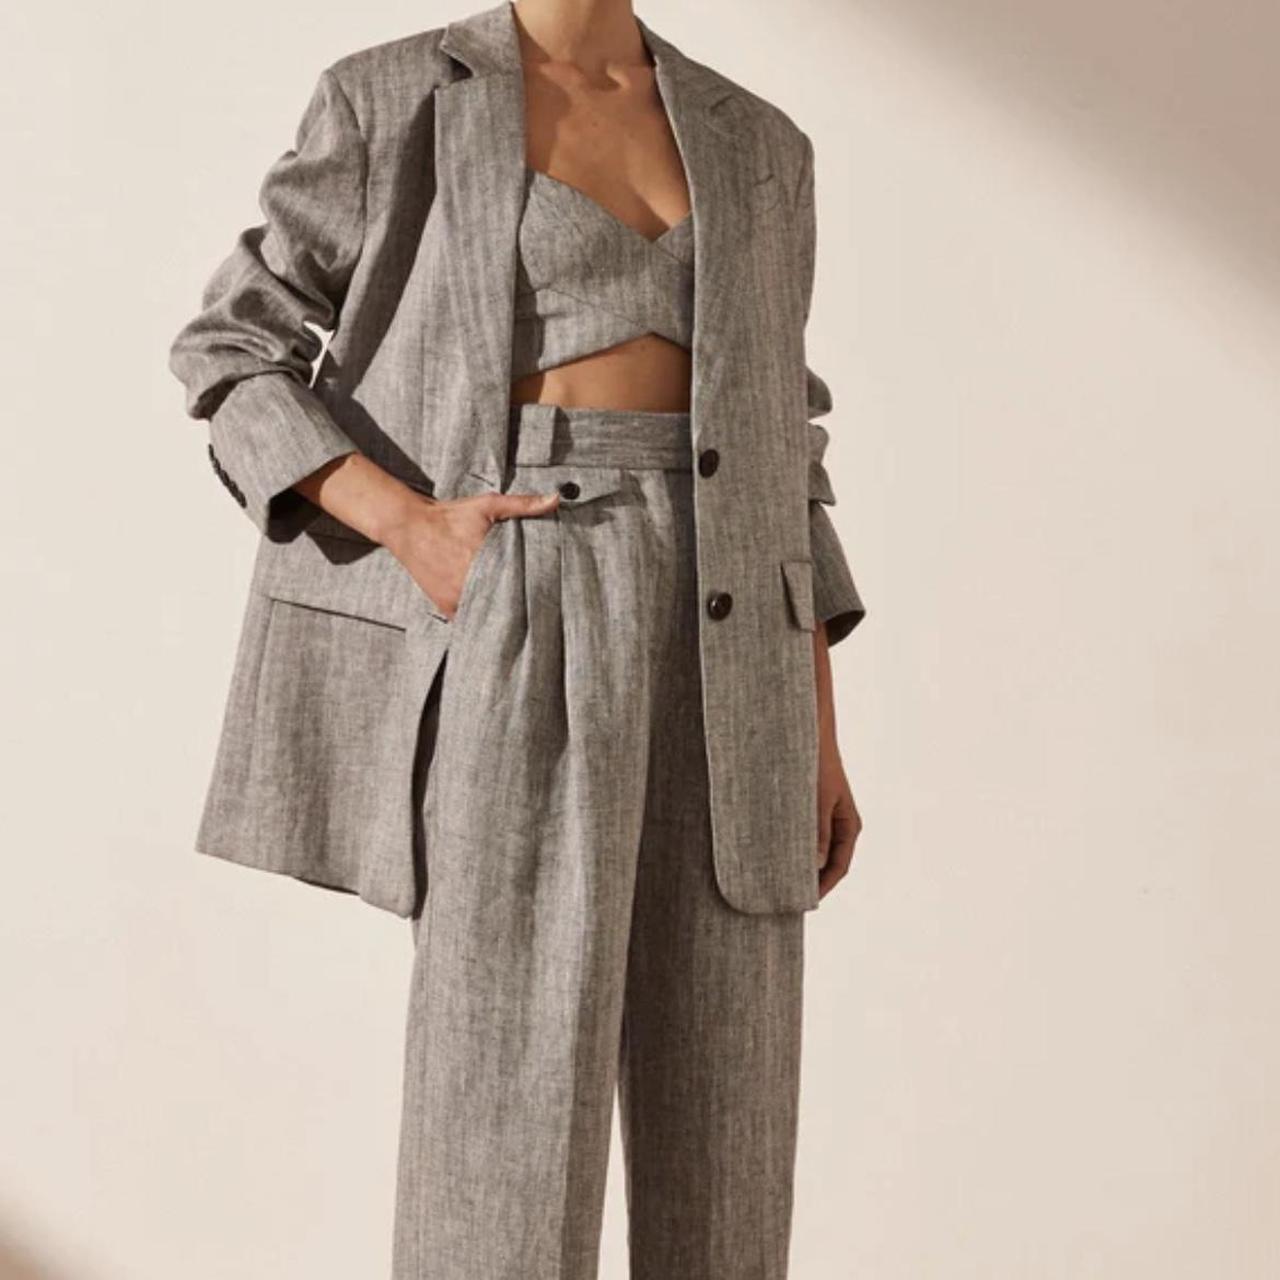 Shona Joy Women's Grey and Black Suit | Depop